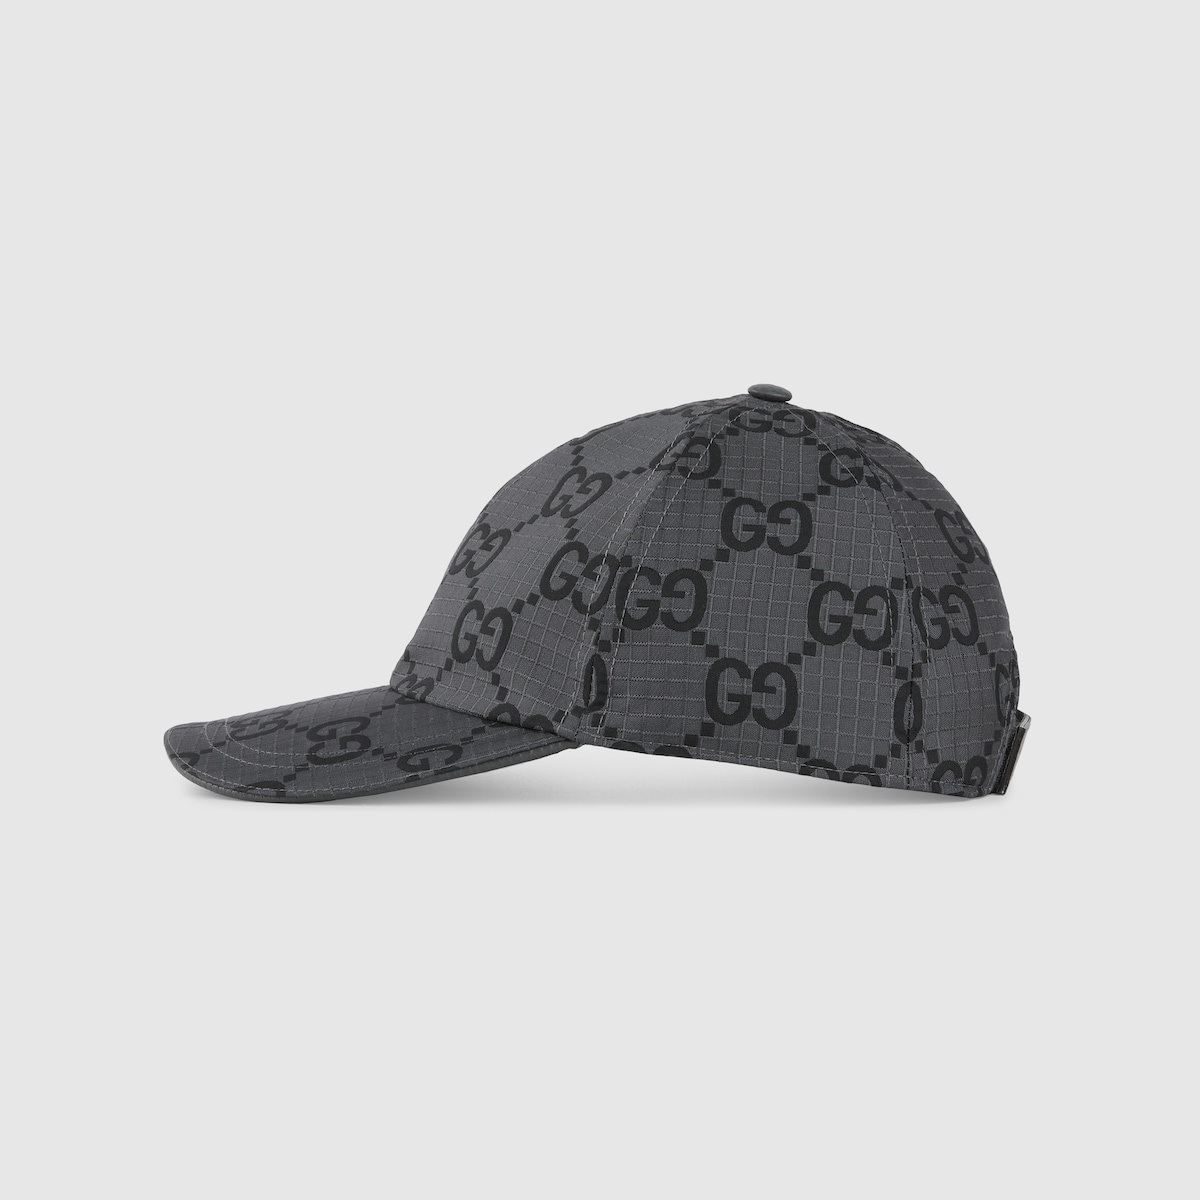 GG ripstop baseball hat - 2